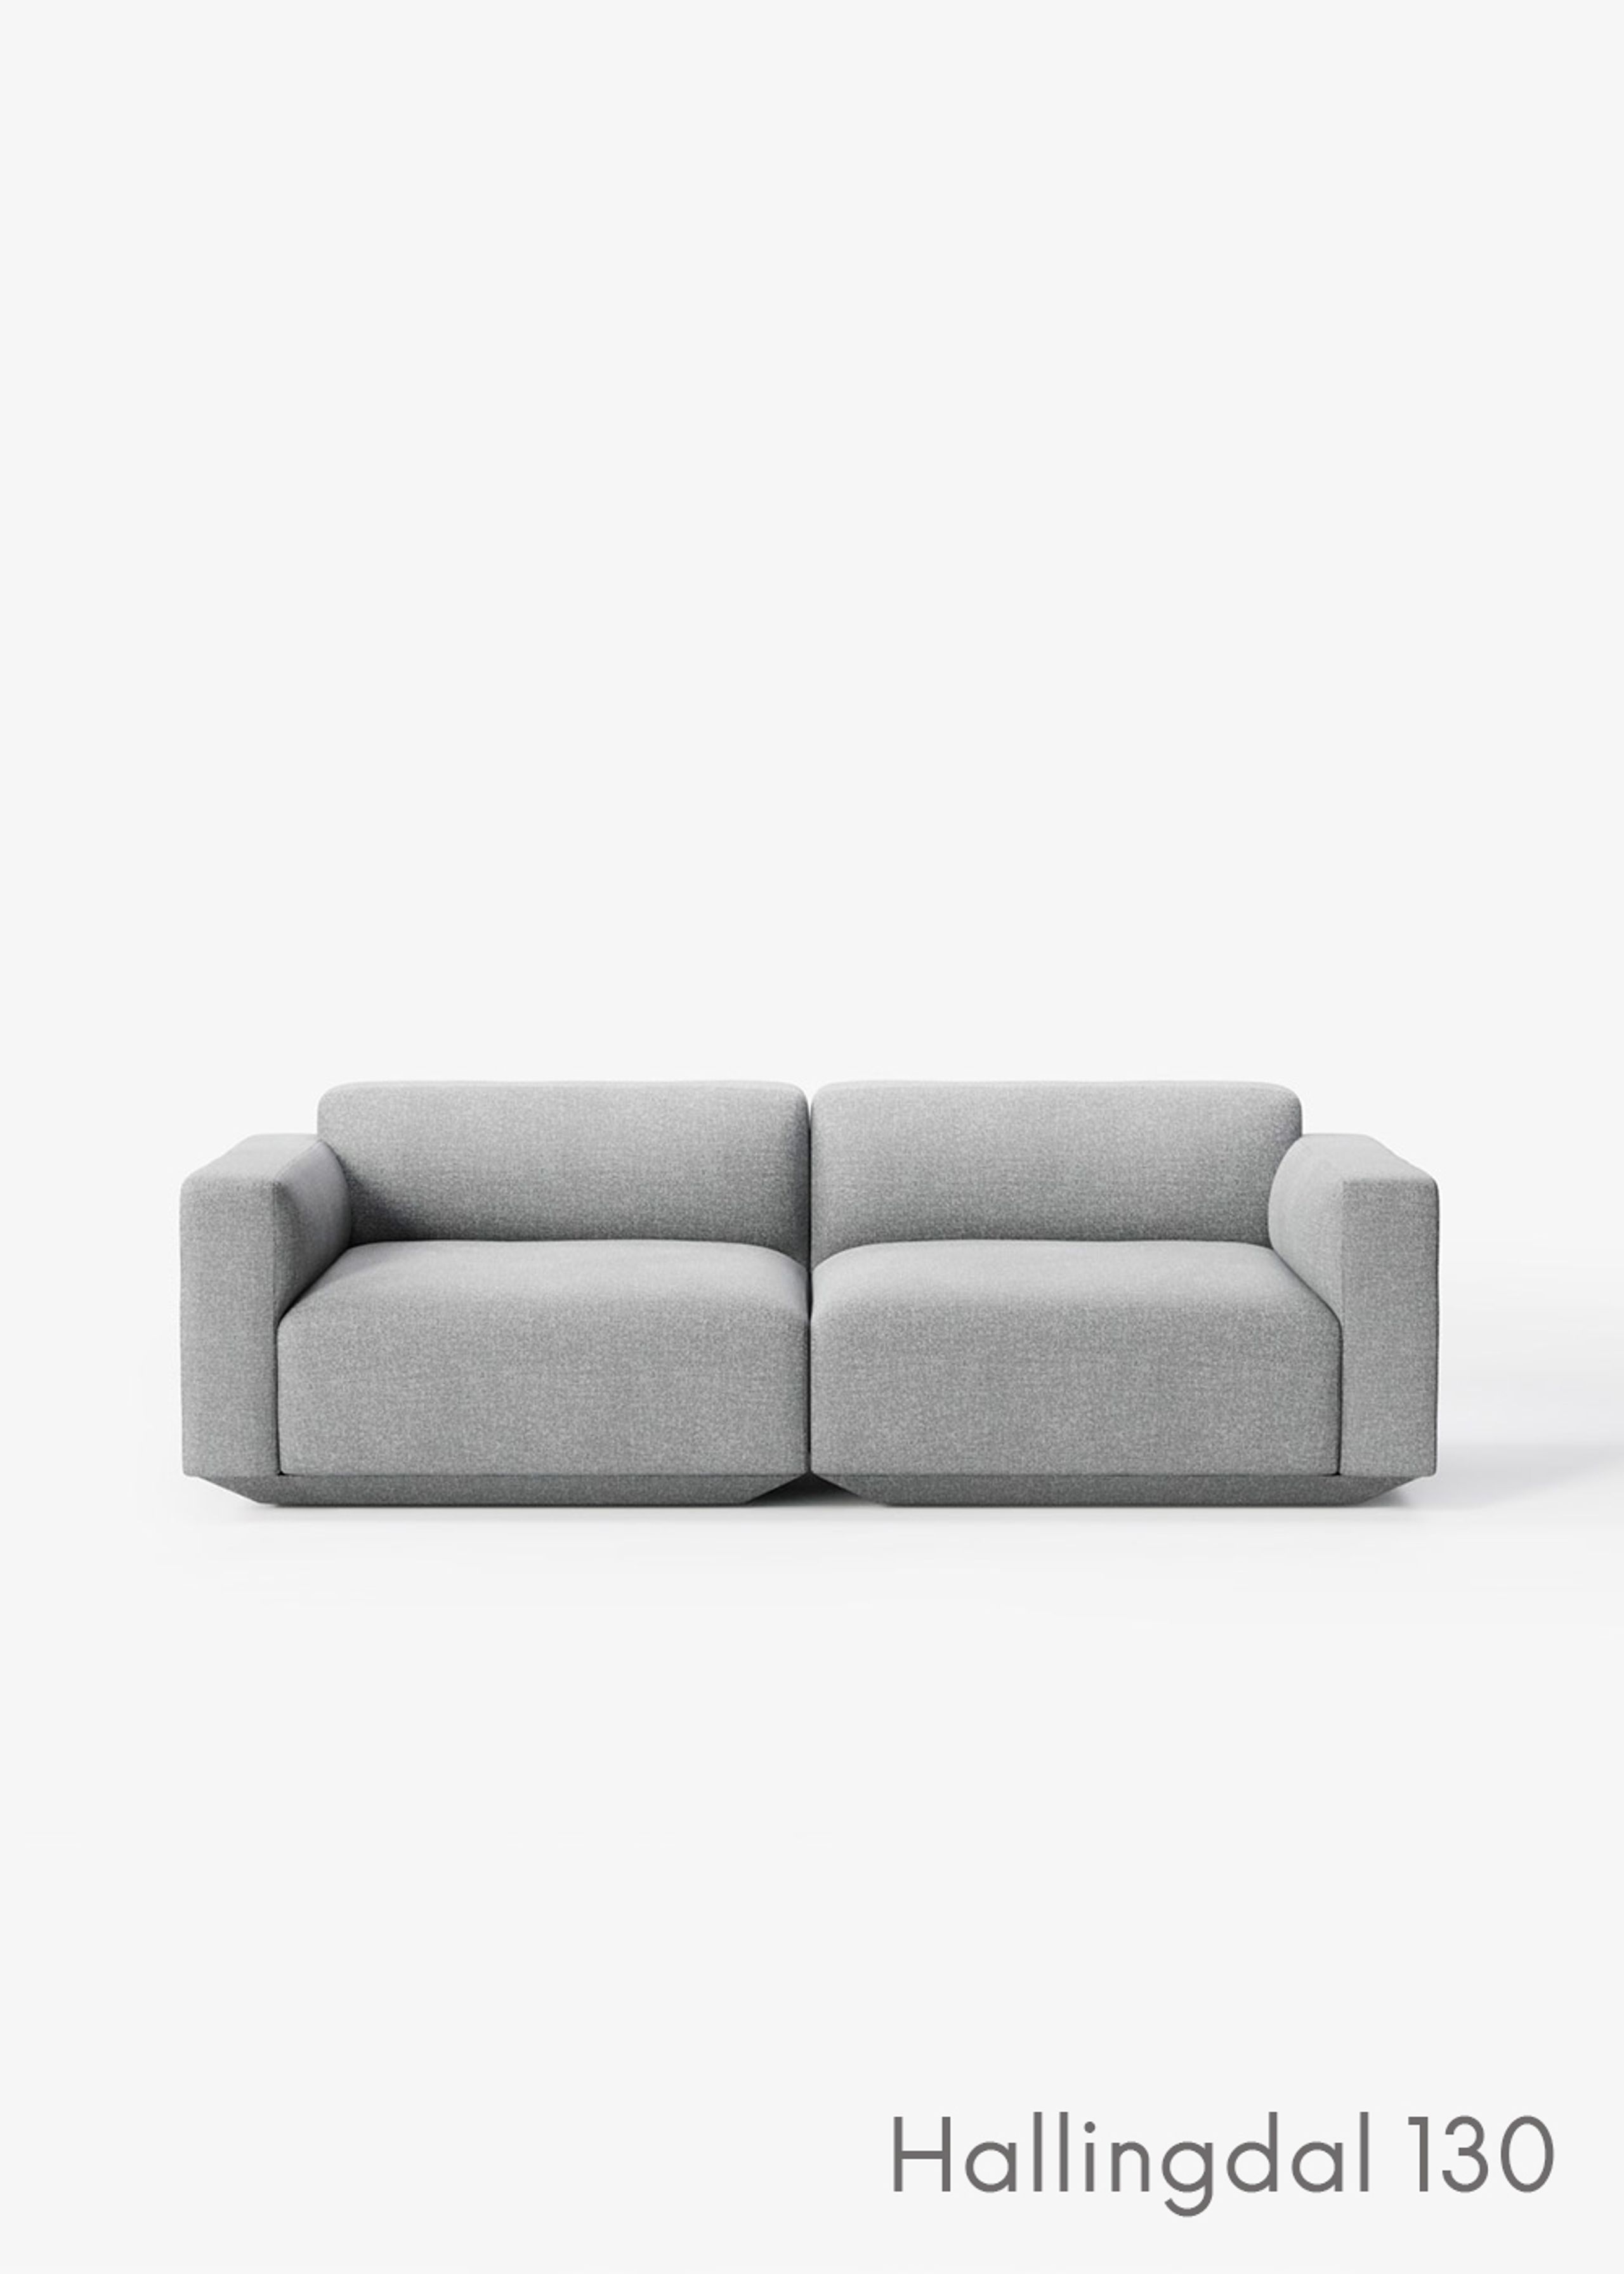 &tradition - Sofa - Develius by Edward van Vliet | Configurations - Configuration A